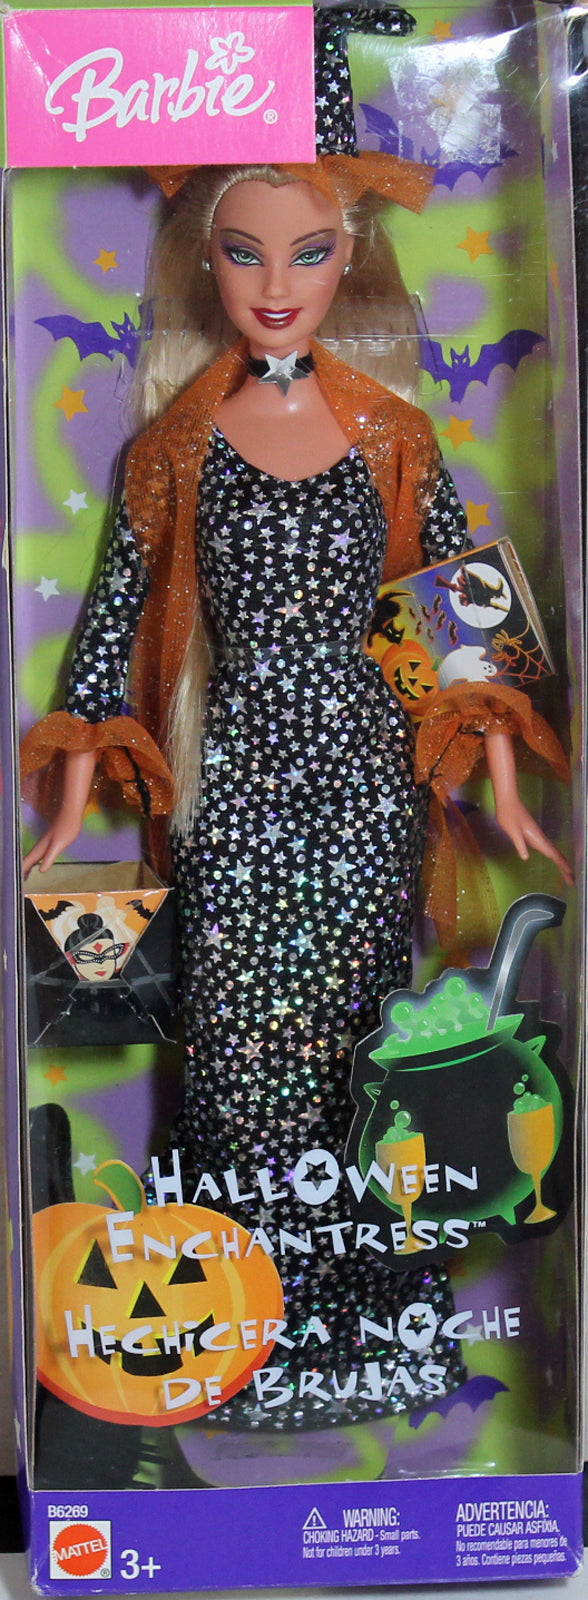 2003 Halloween Enchantress Barbie (B6269)